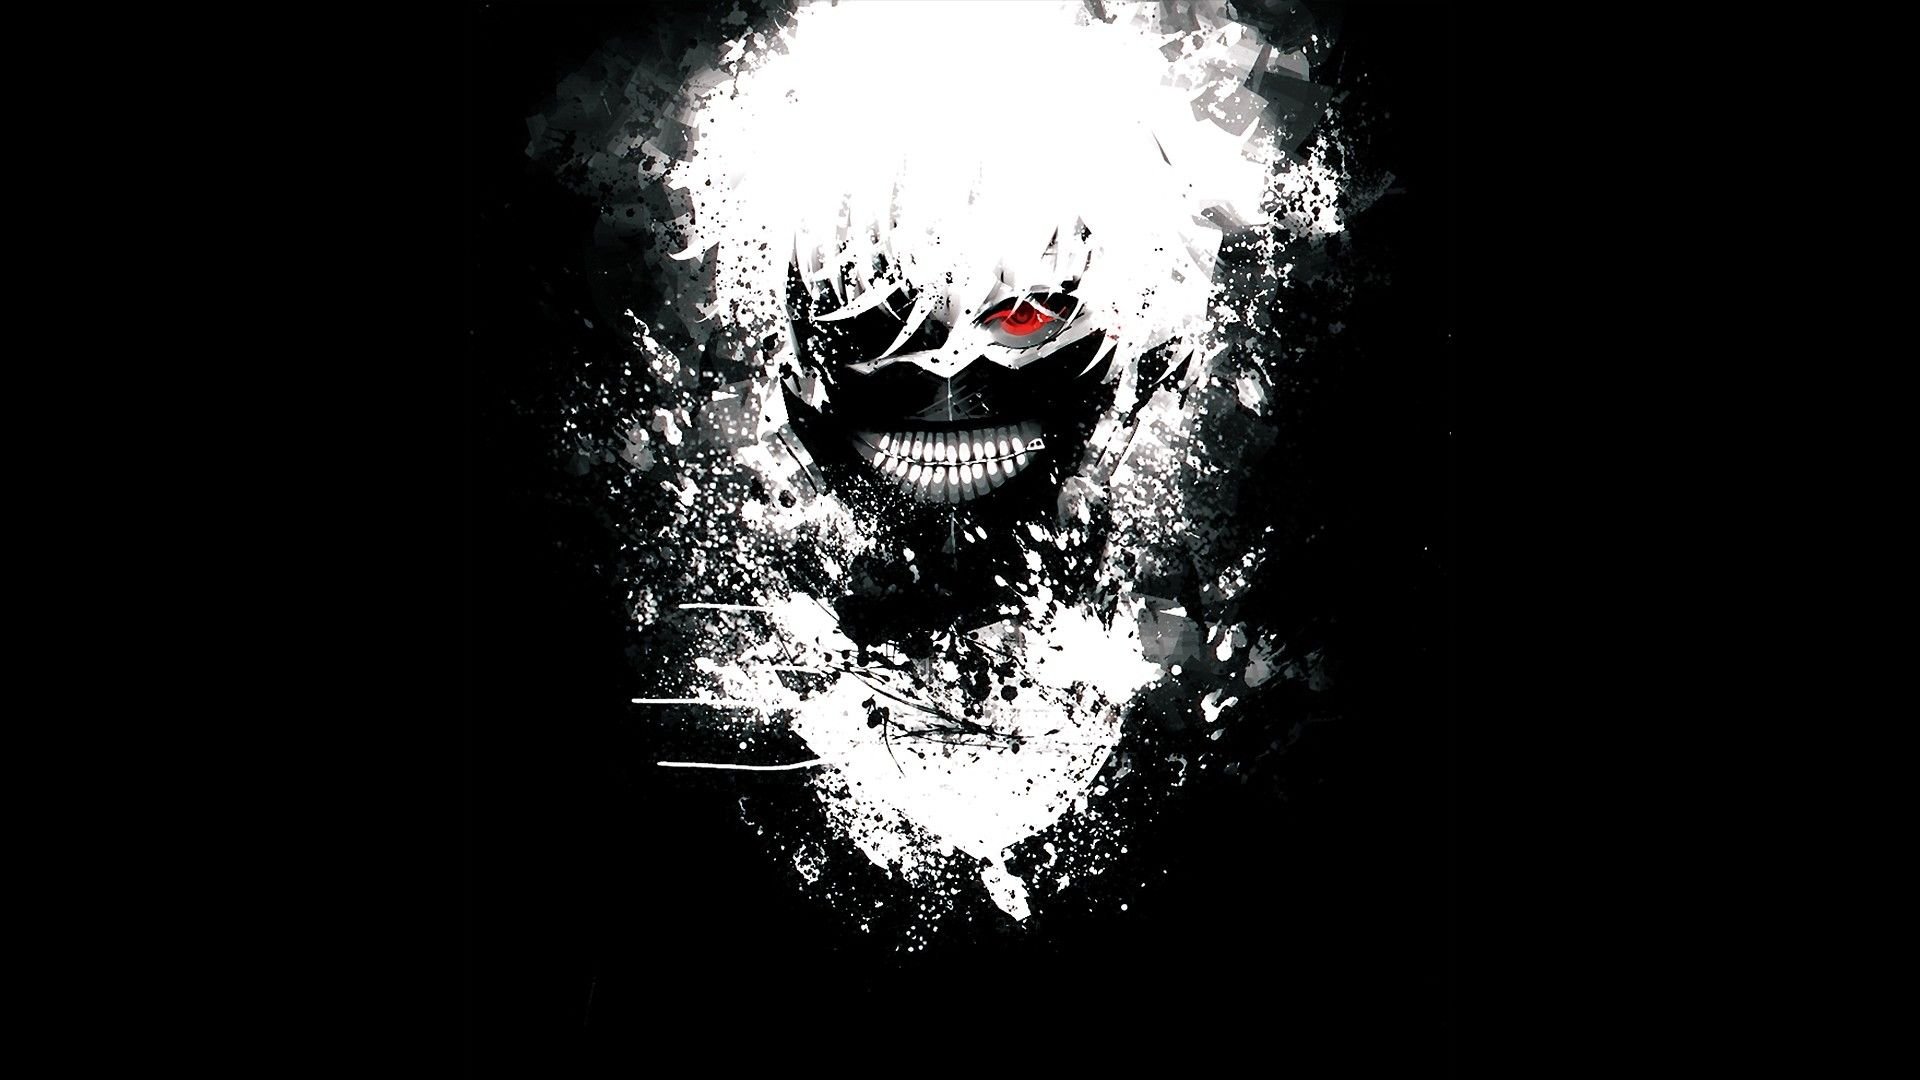 Download wallpaper 950x1534 tokyo ghoul dark anime boy artwork iphone  950x1534 hd background 18584